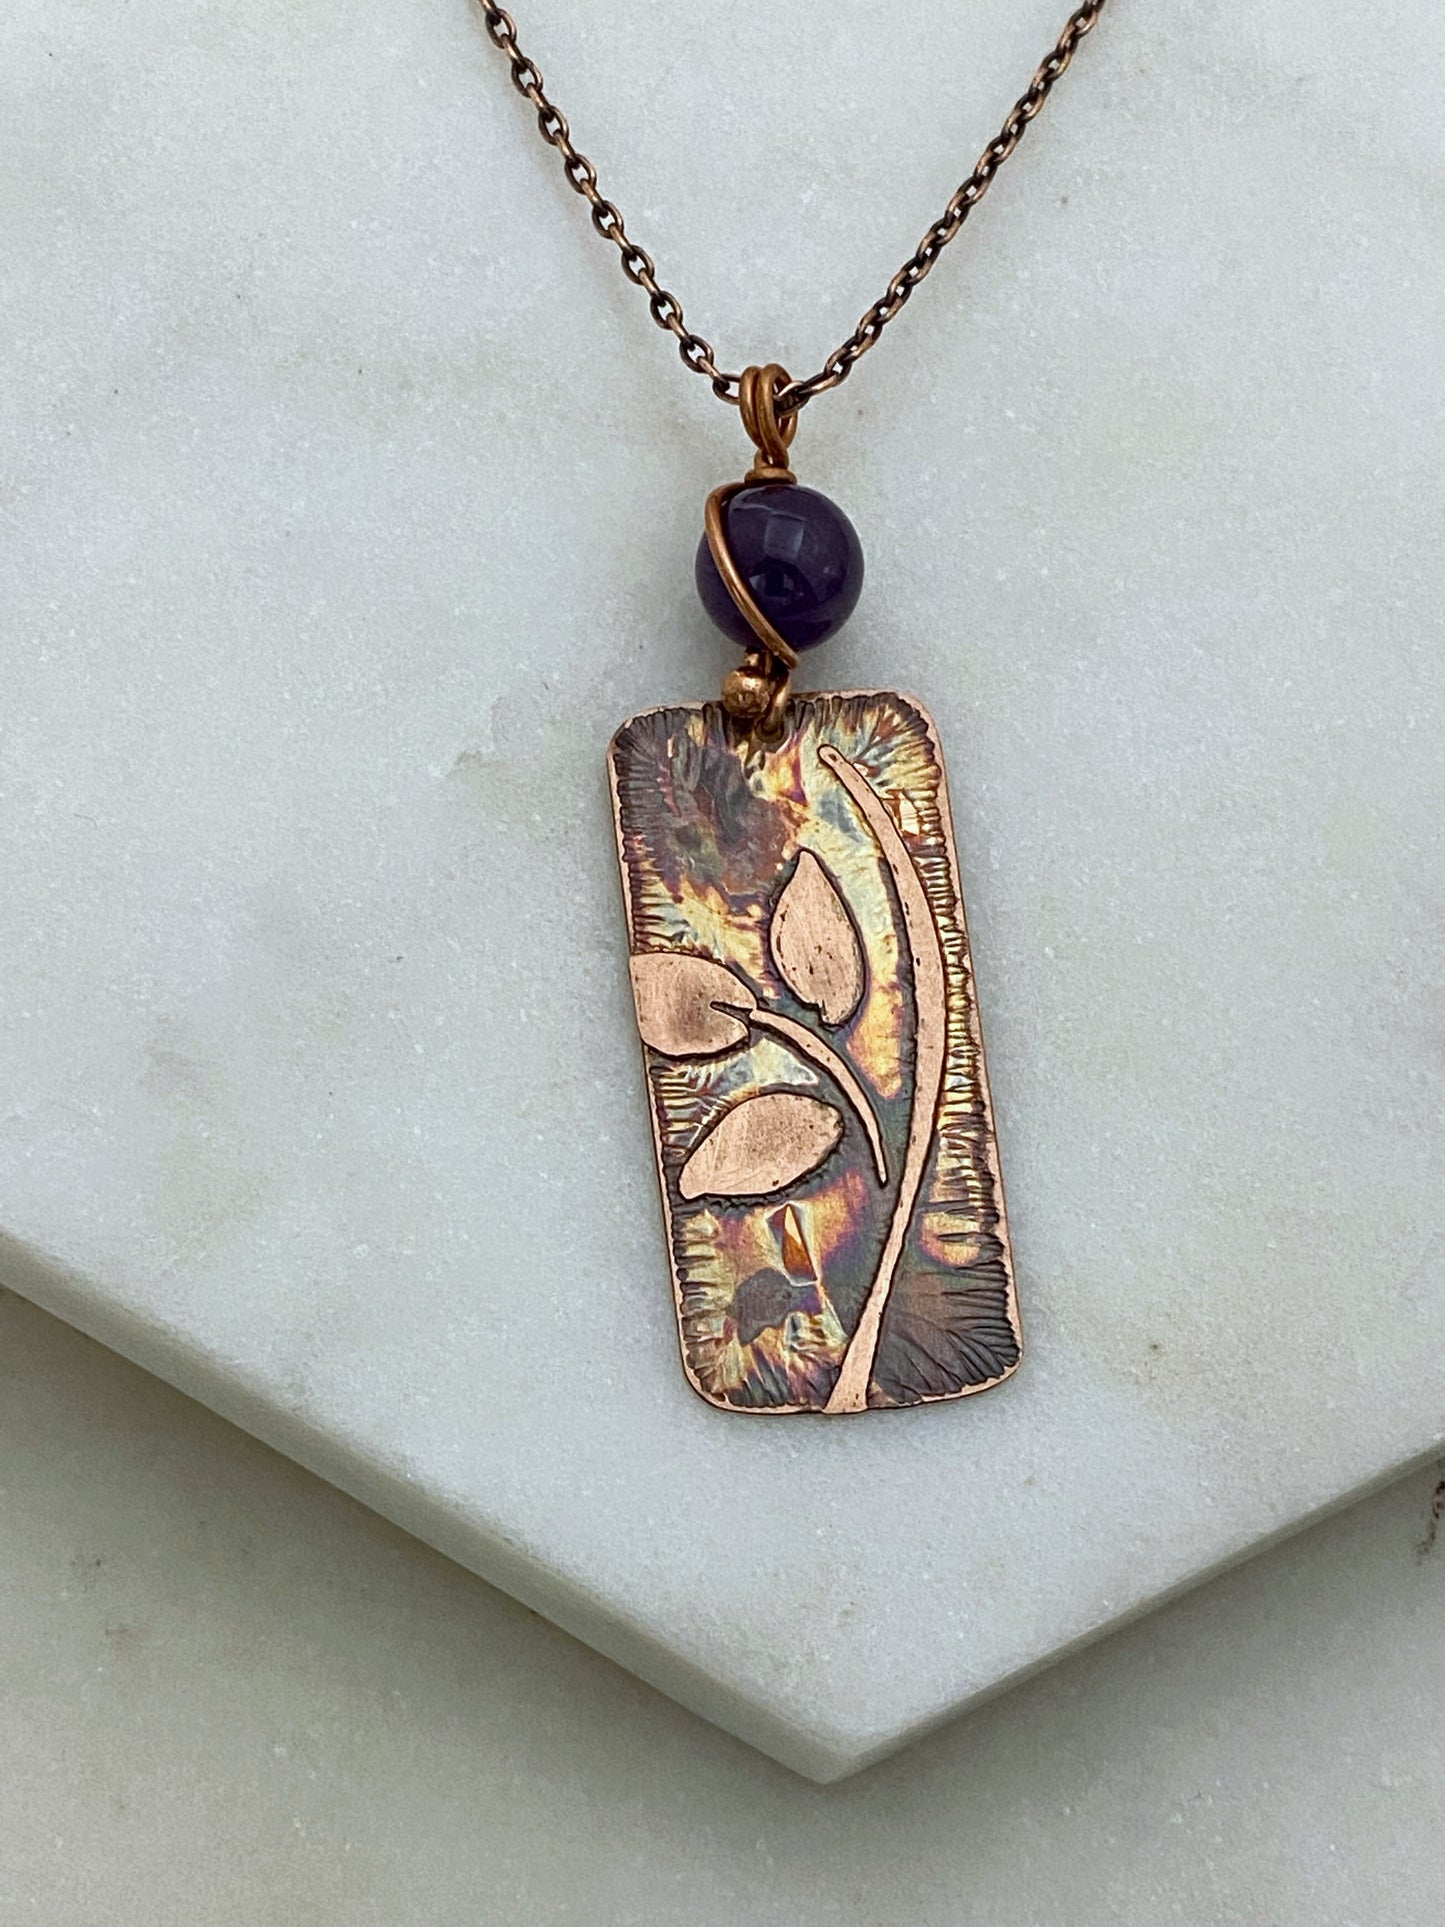 Acid etched copper leaf necklace with amethyst gemstone